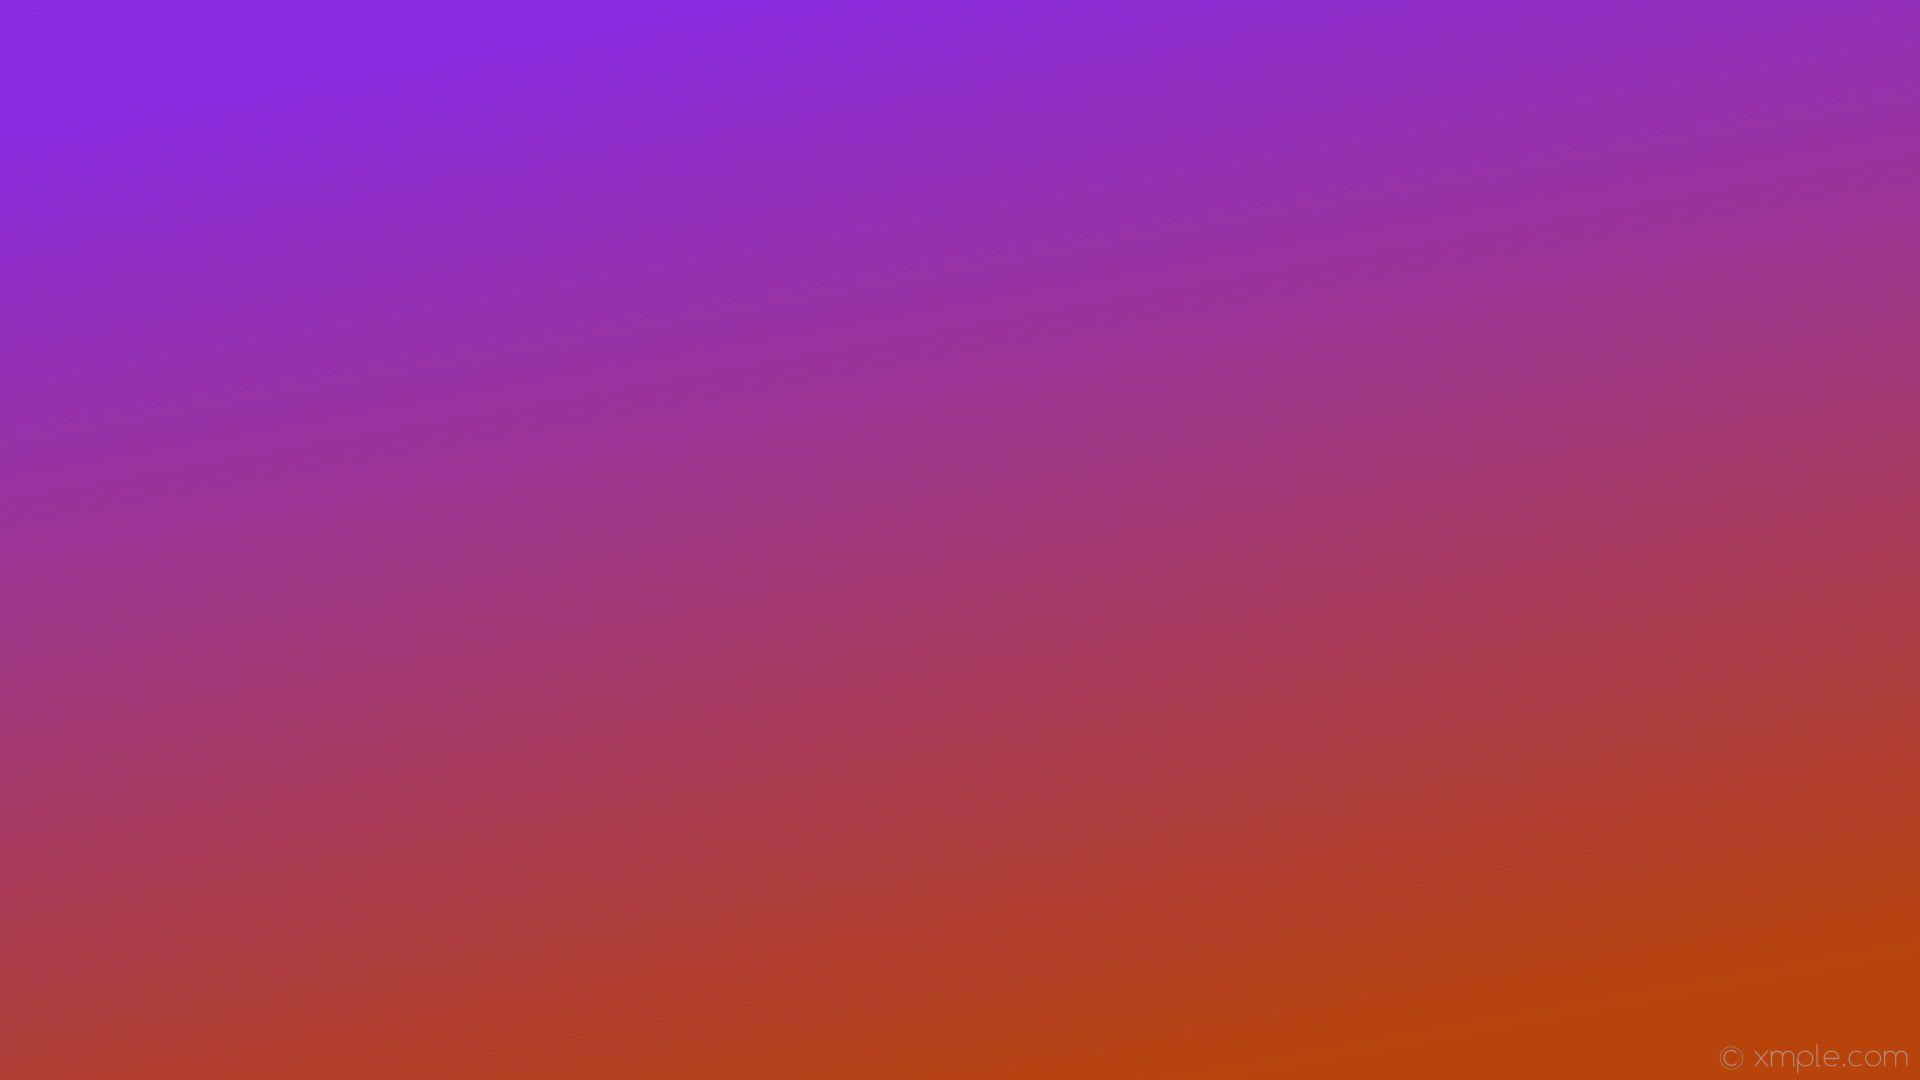 Purple and Orange Wallpaper Free Purple and Orange